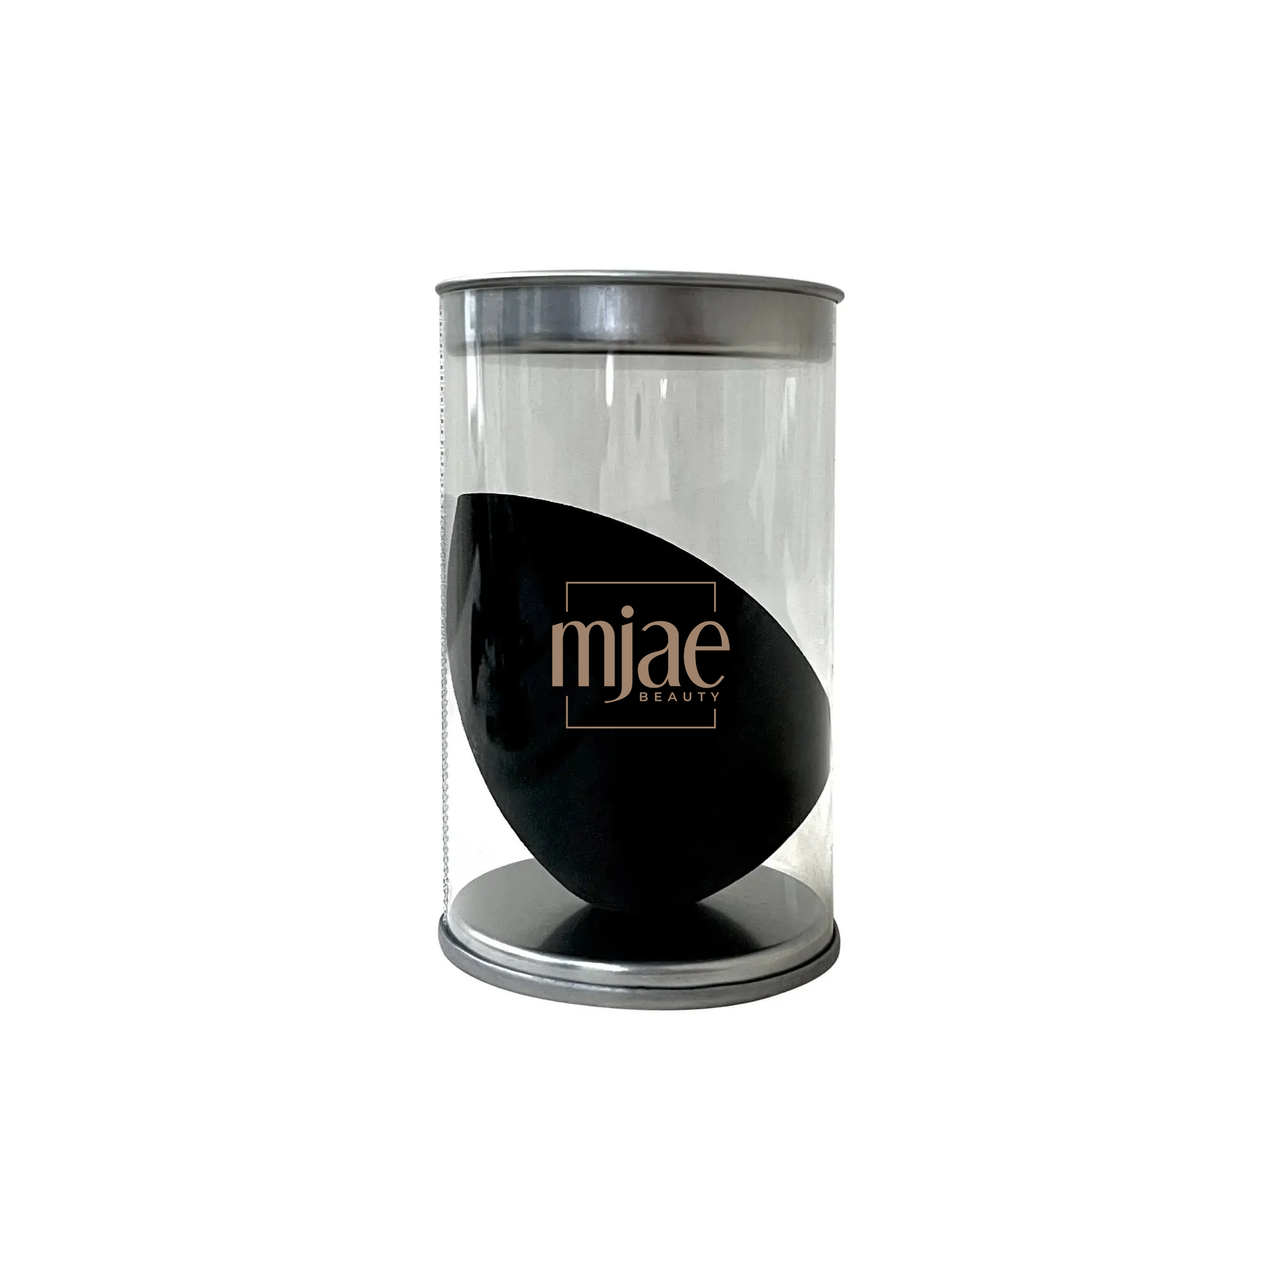 Mjae Classic Blender - Clean Beauty